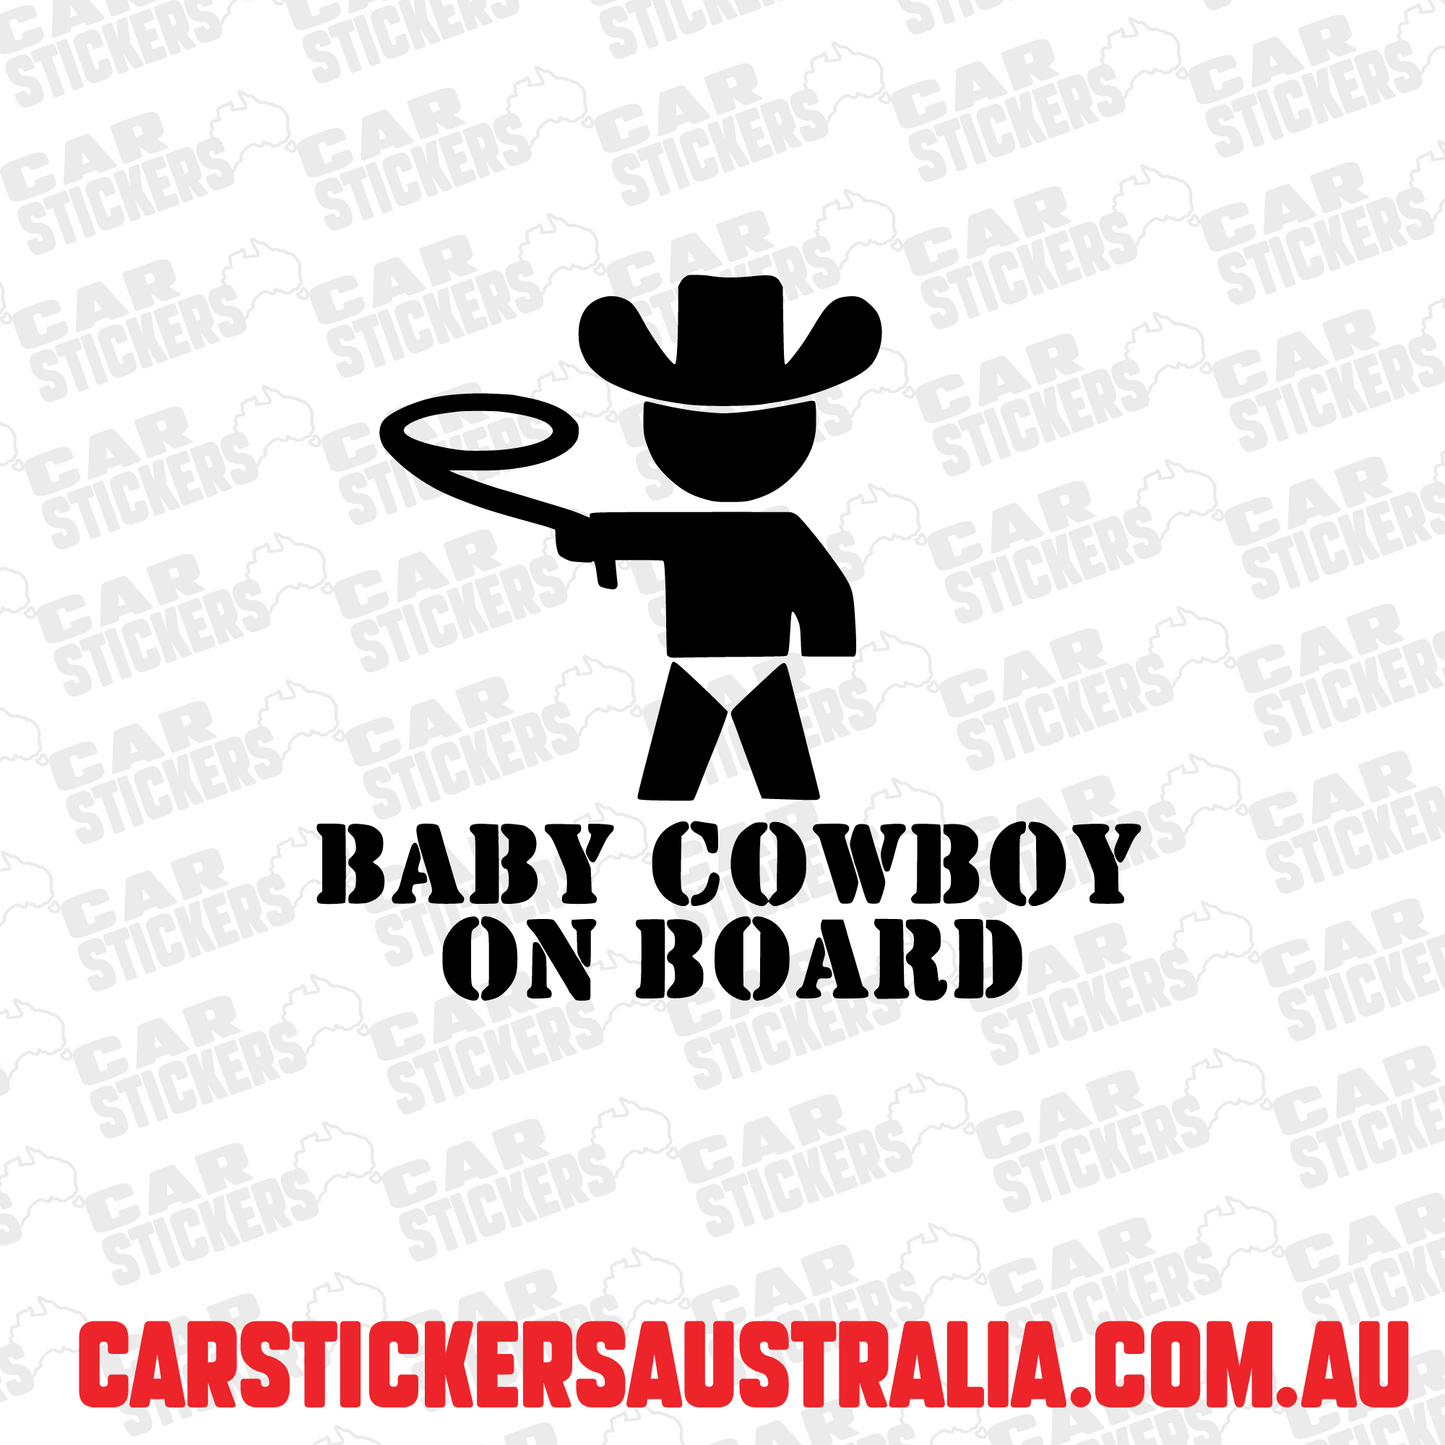 Baby Cowboy on Board